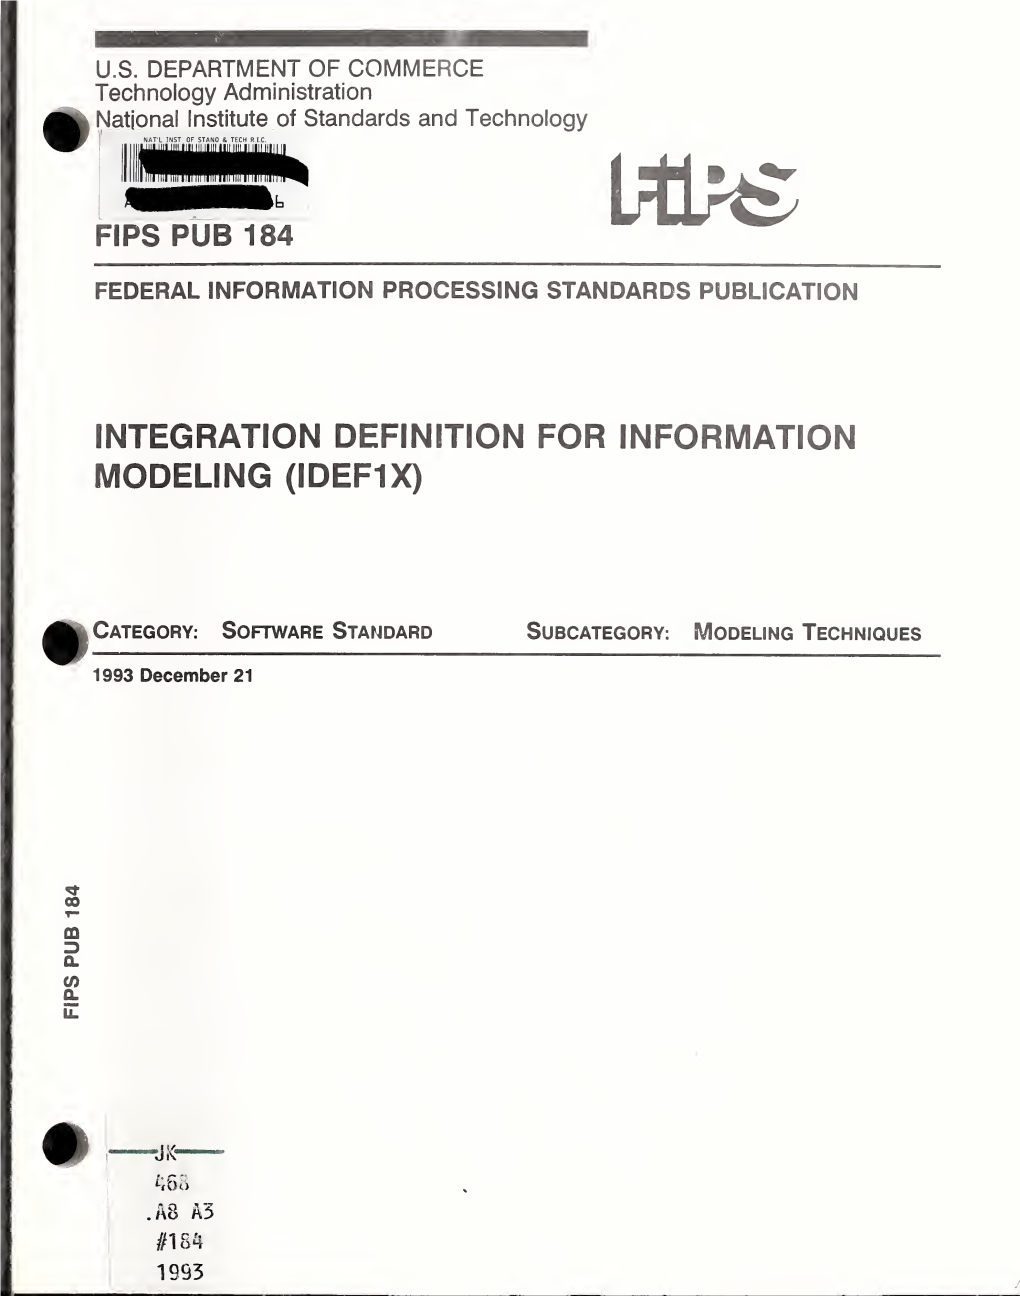 Federal Information Processing Standards Publication